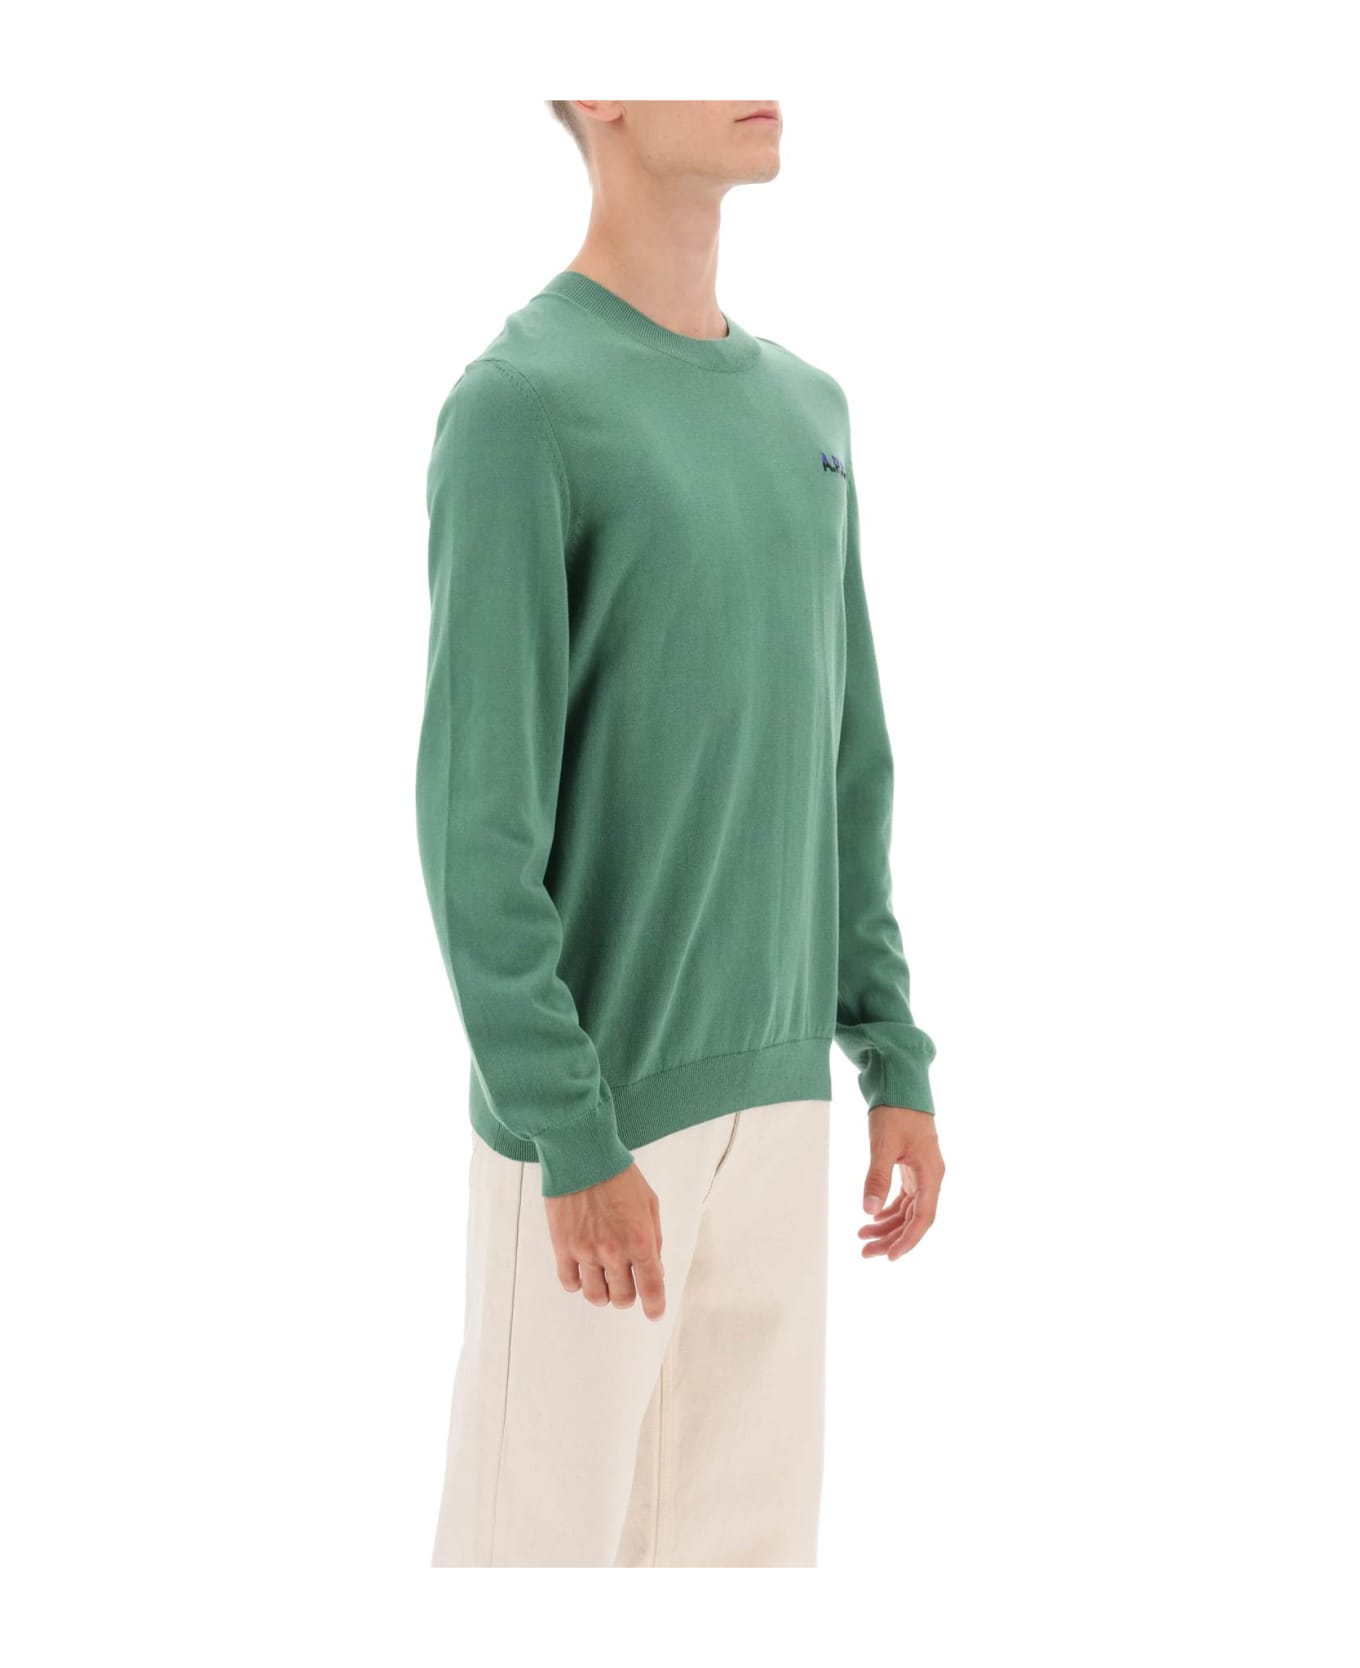 A.P.C. Cotton Crewneck Sweater - Tki Vert Marine